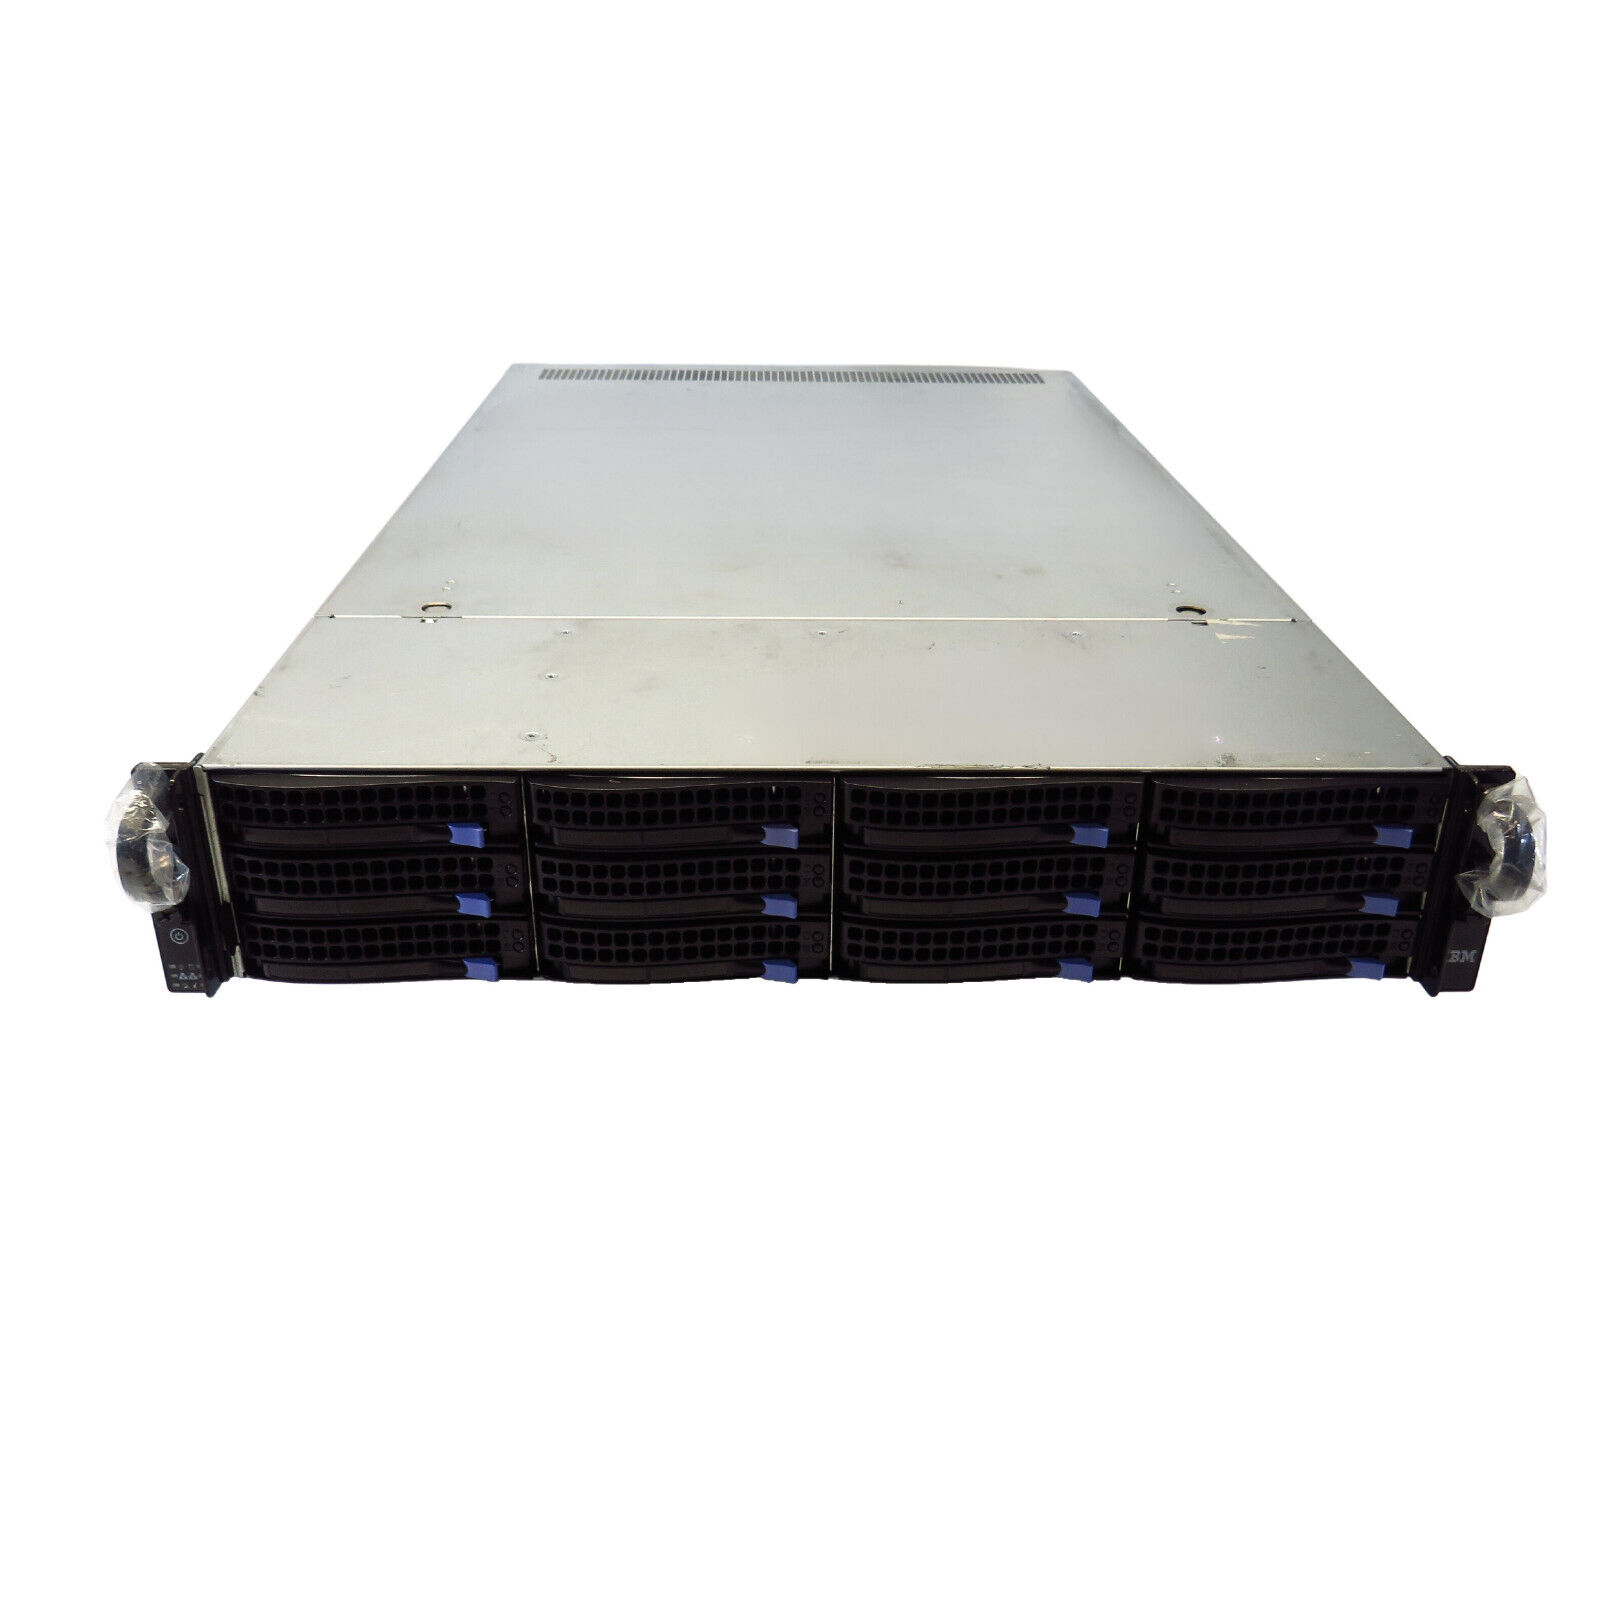 IBM 9006-22C 12 Bay LFF SAS3 12G Dual 22 Core 2.6GHz Power9 P9 Linux Server